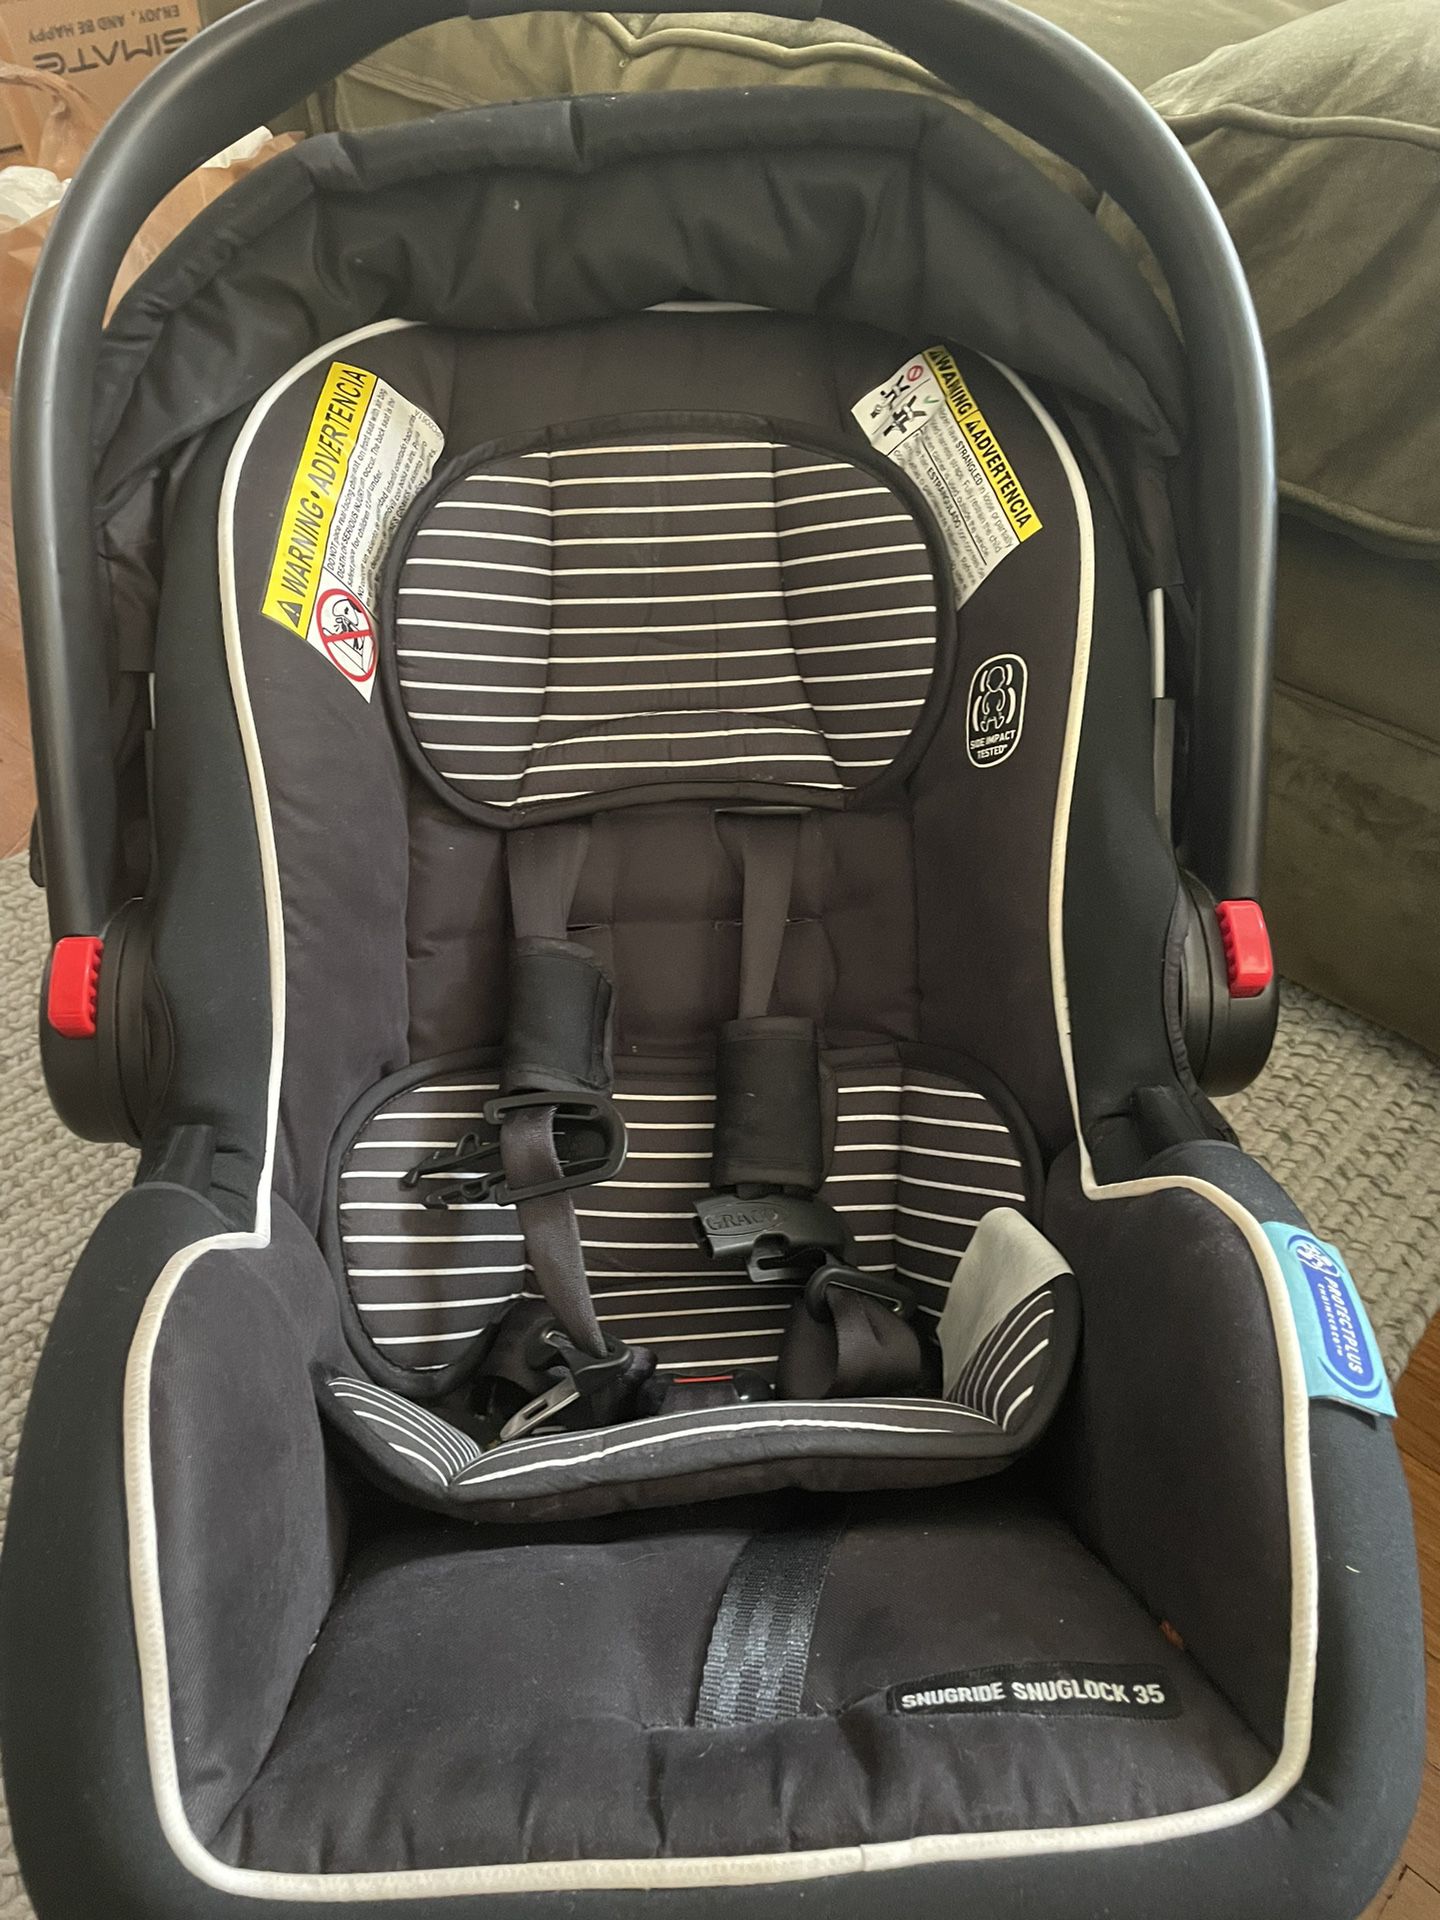 Graco snug ride Snug lock Infant Car Seat 